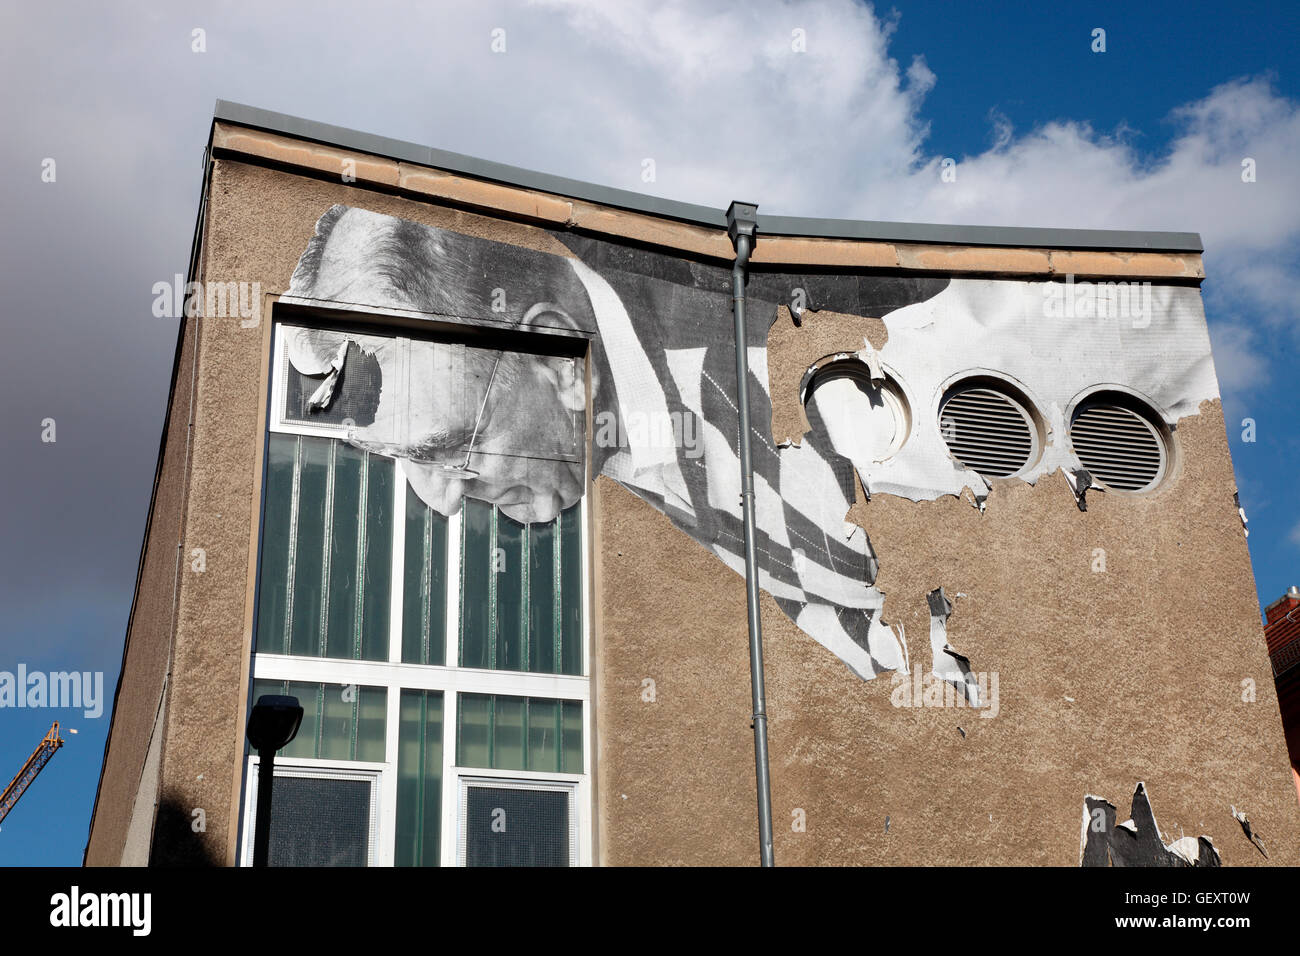 Street art on gable end of house in Hackescher in Berlin. Stock Photo